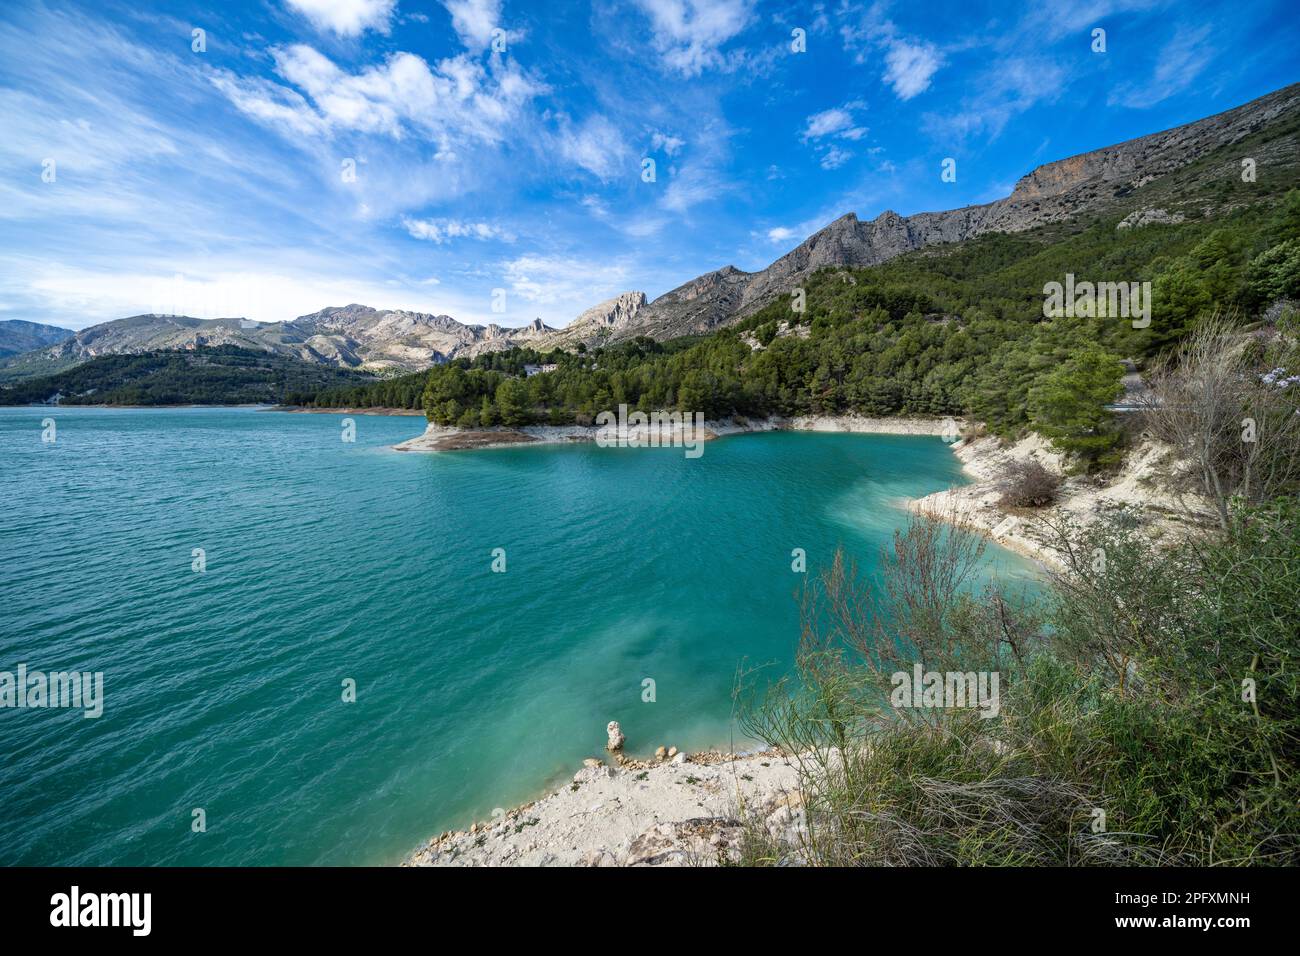 Guadalest reservoir near Beniarda, Alicante, Spain Stock Photo